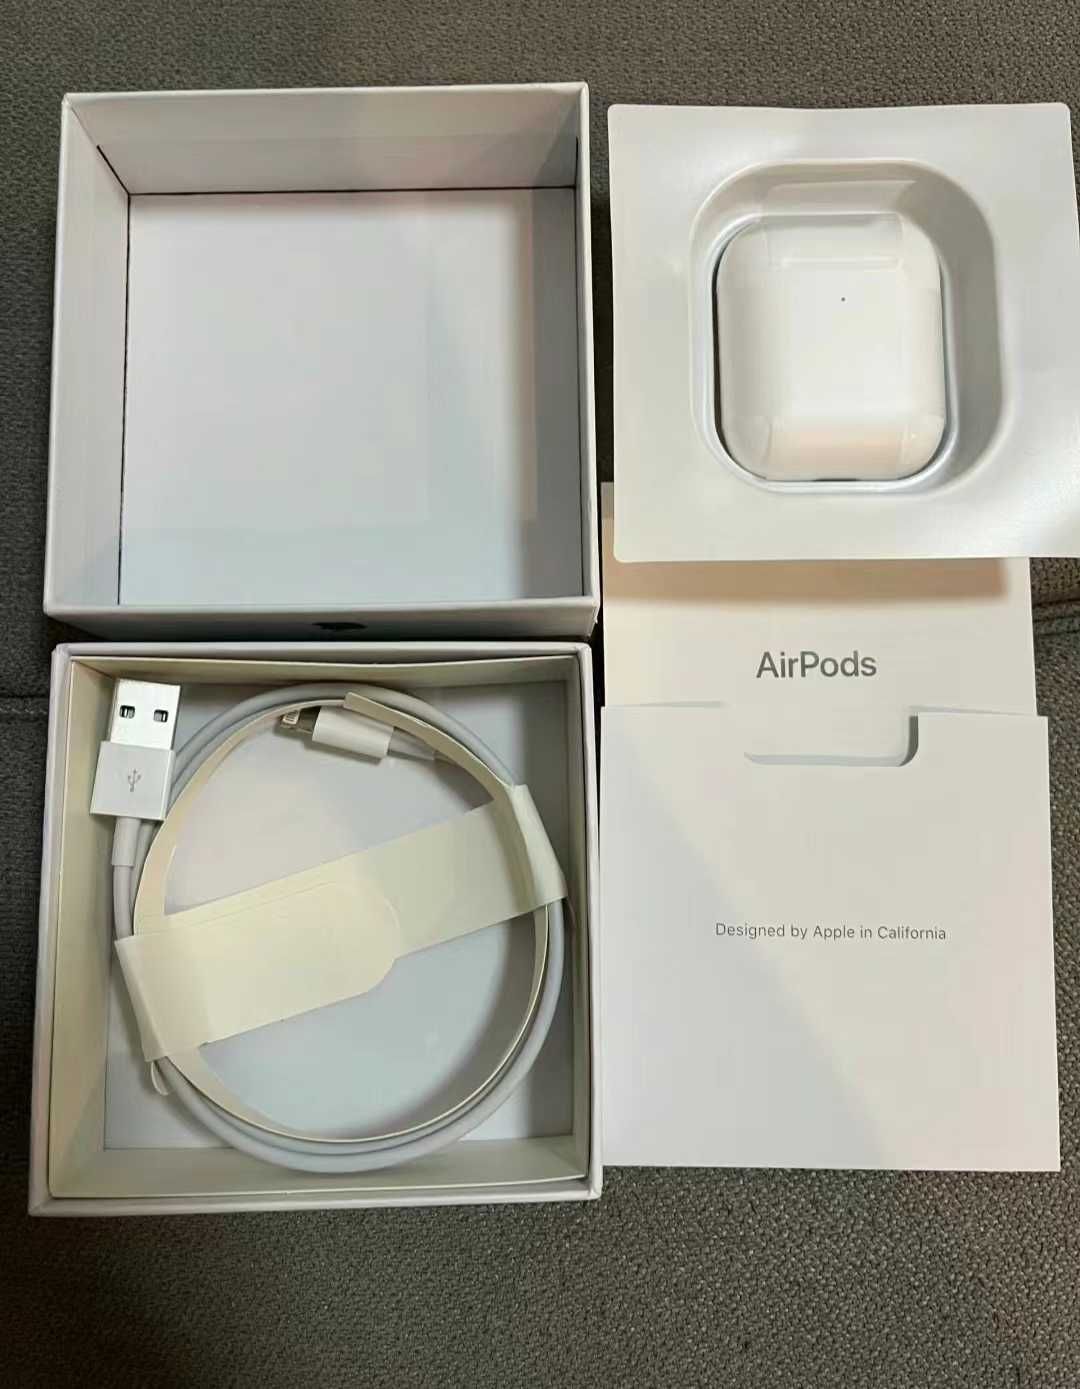 Apple AirPods Pro 2 USB-C